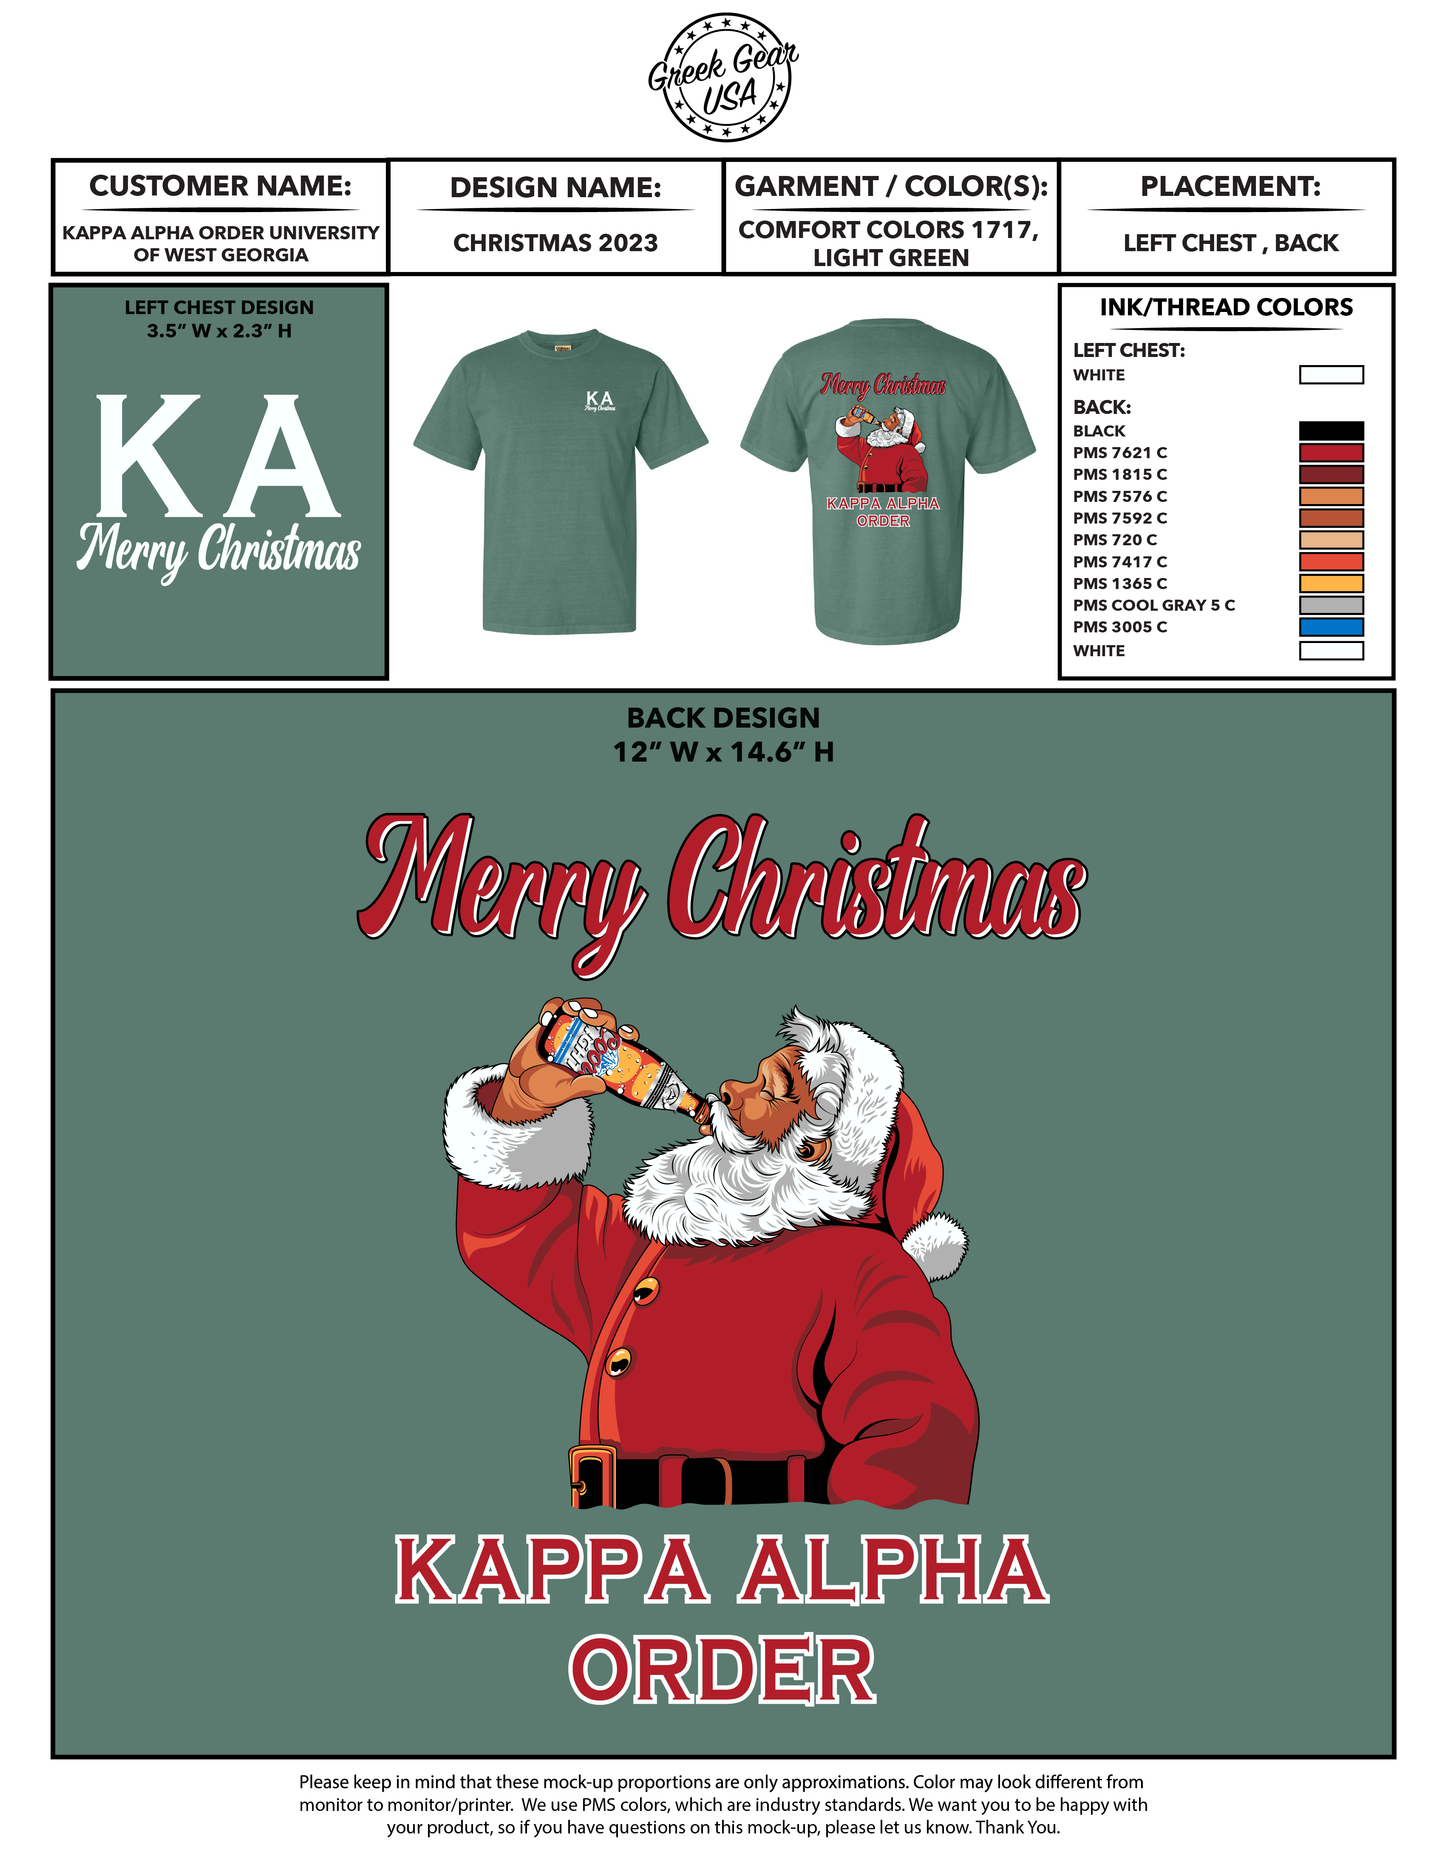 Kappa Alpha Order University of West Georgia Christmas 2023 Tees